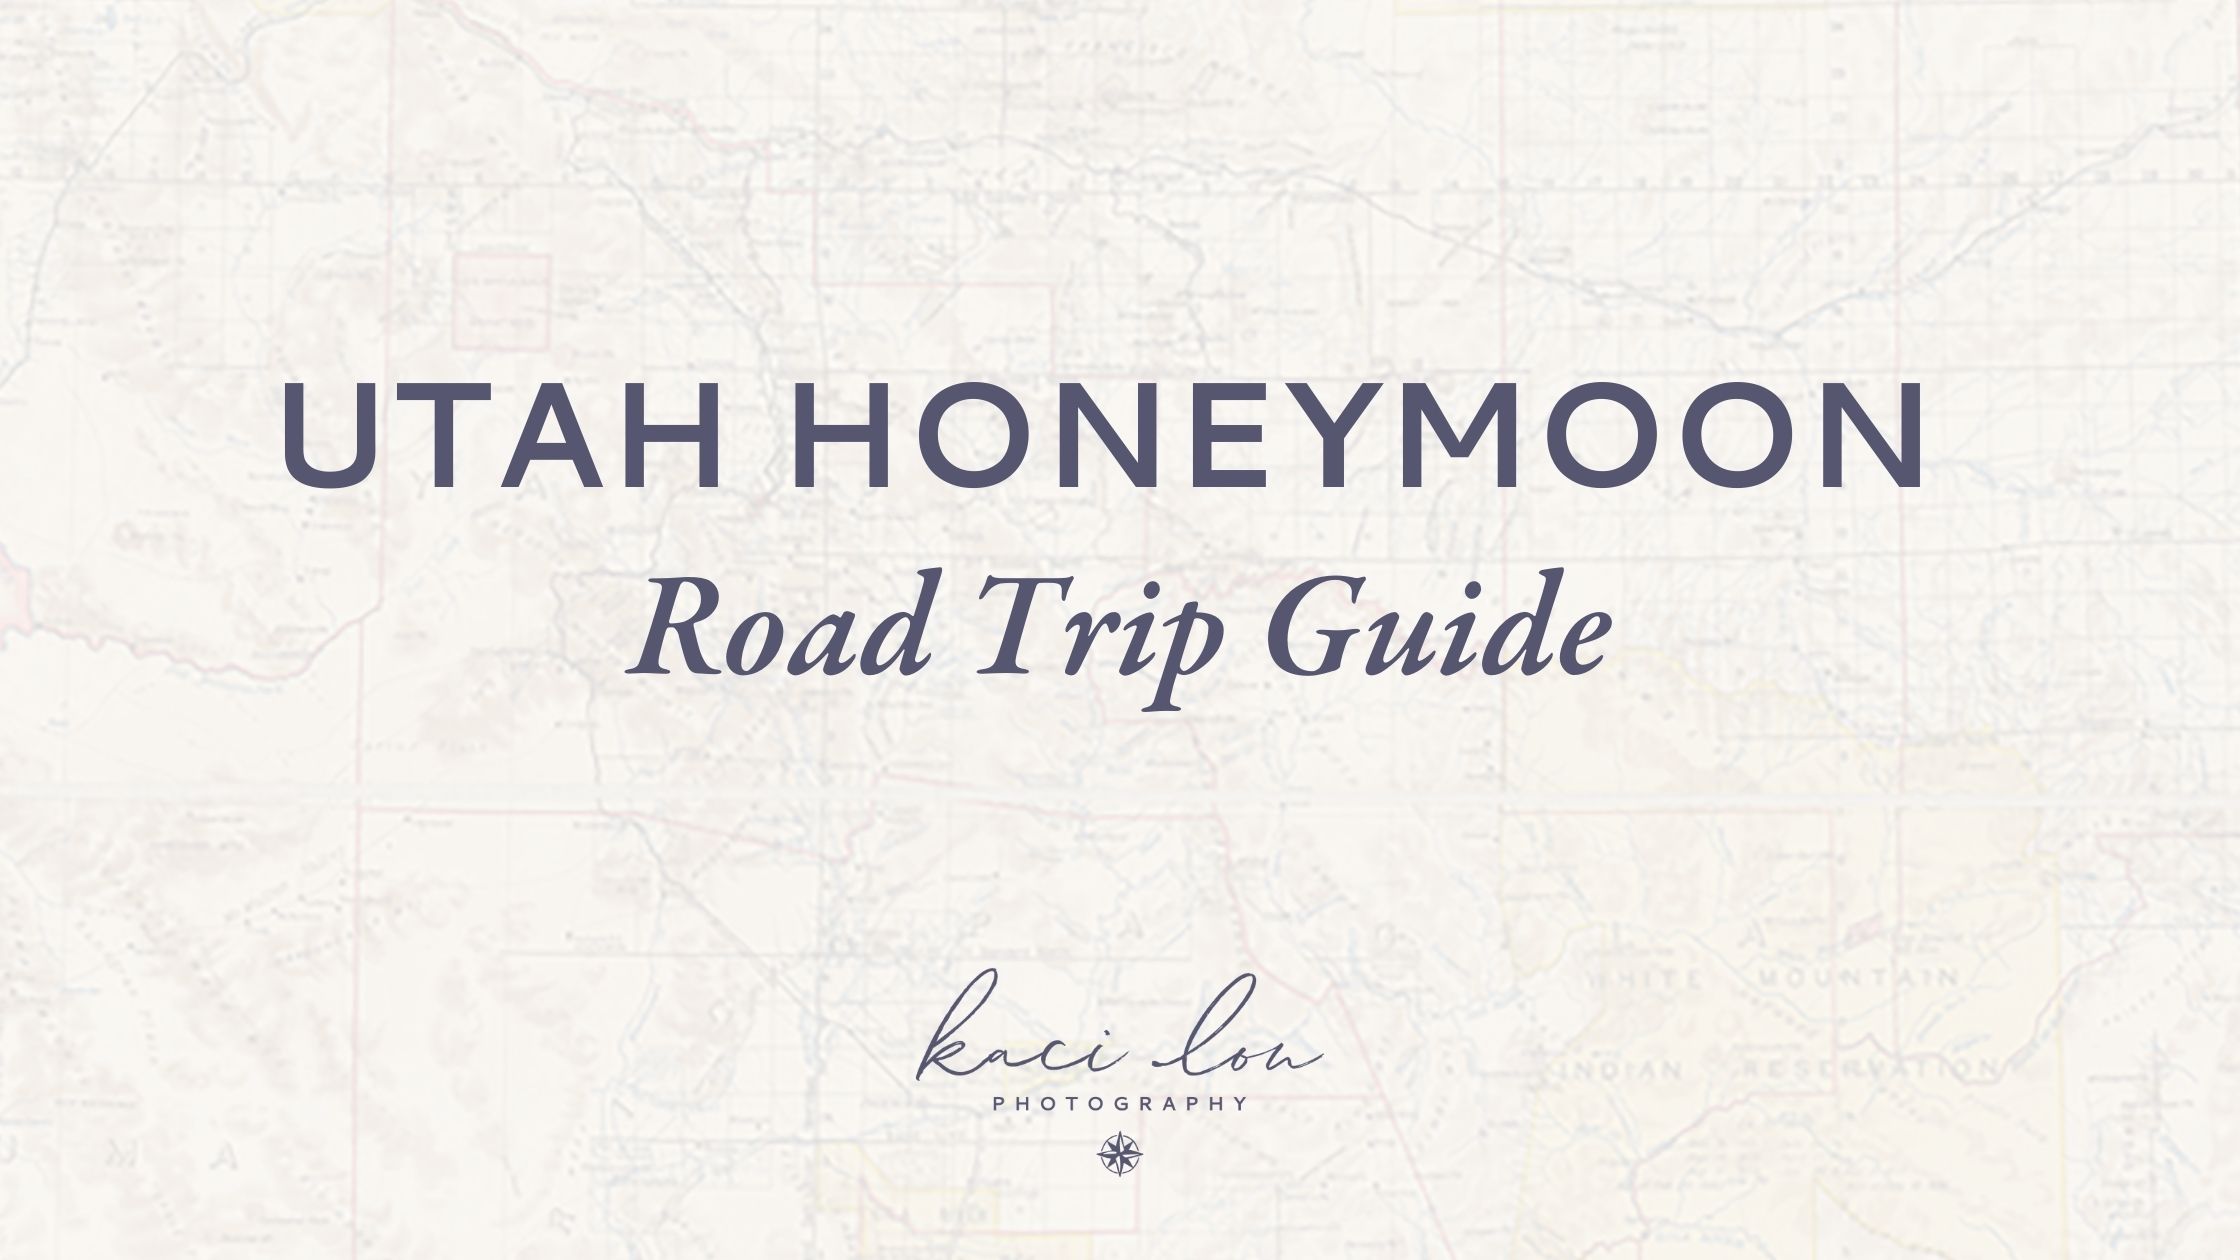 Utah Honeymoon Road Trip Guide, Blog Cover by Kaci Lou Photography